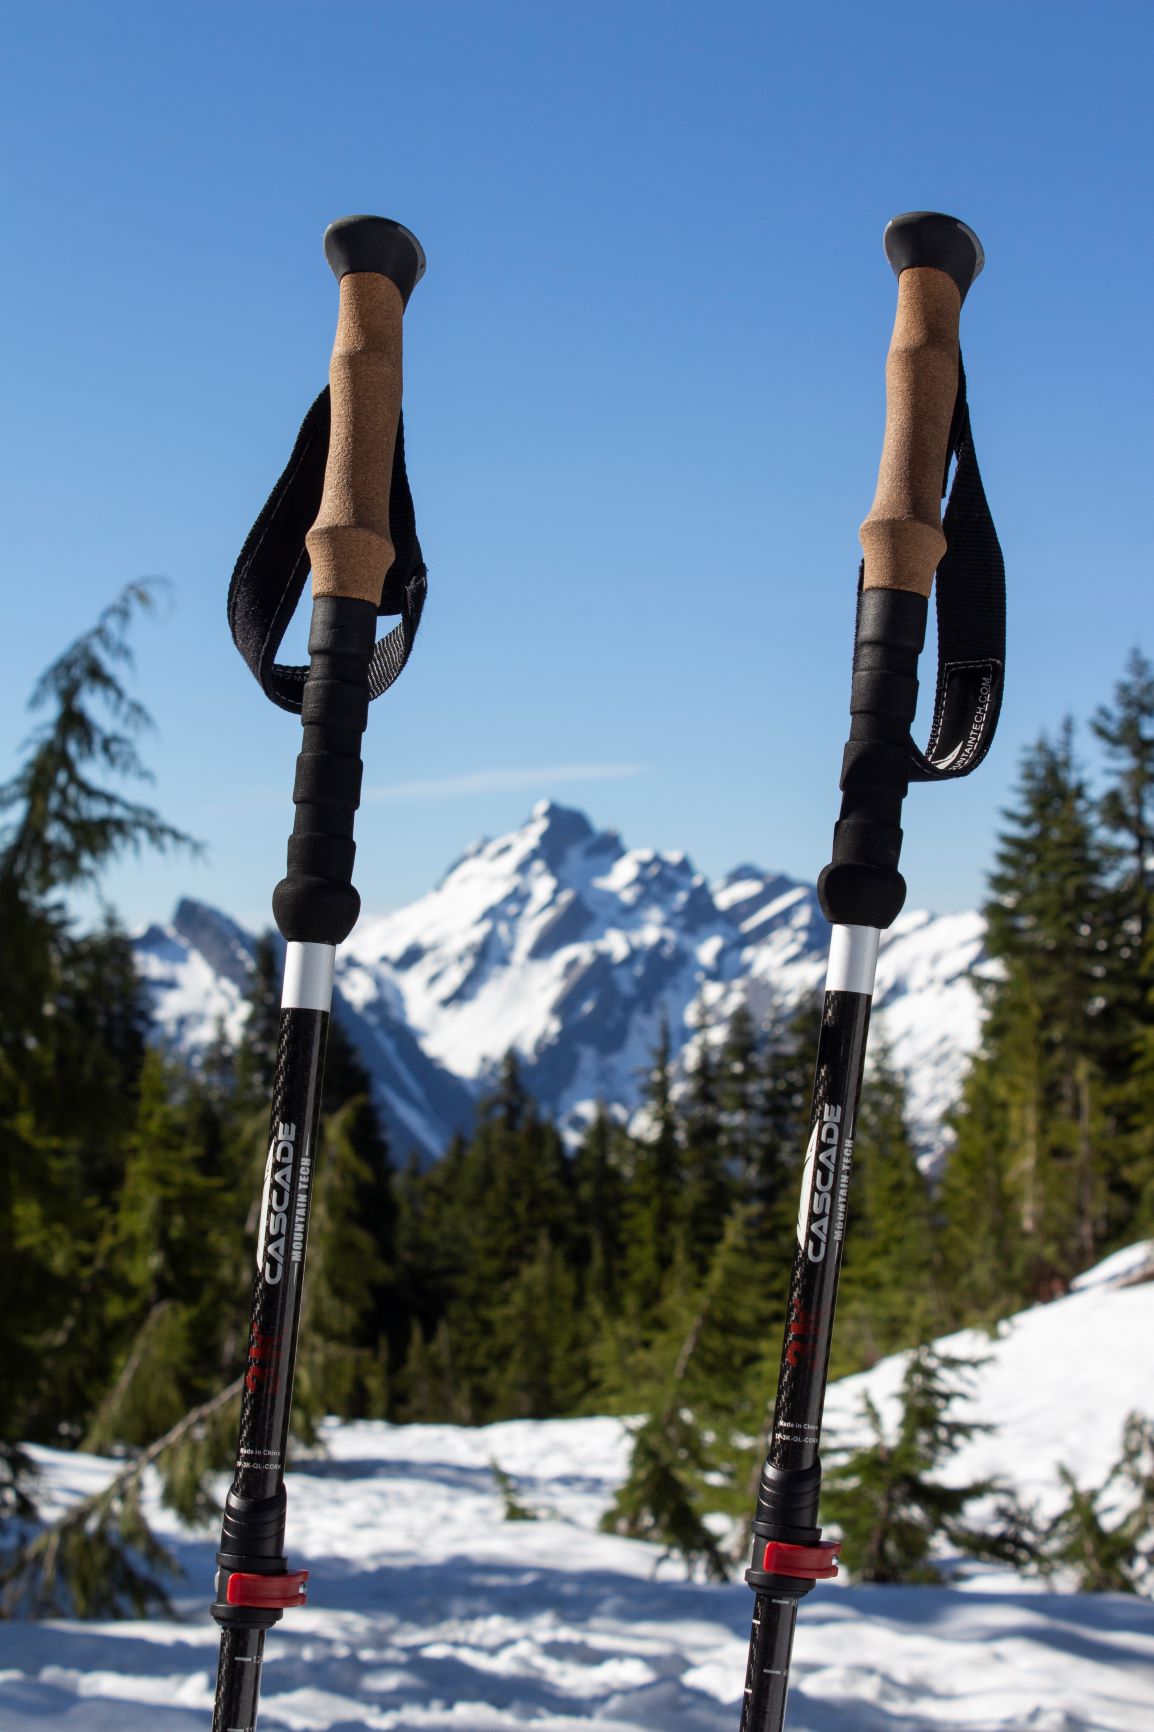 cascade mountain tech 3k carbon fiber trekking poles